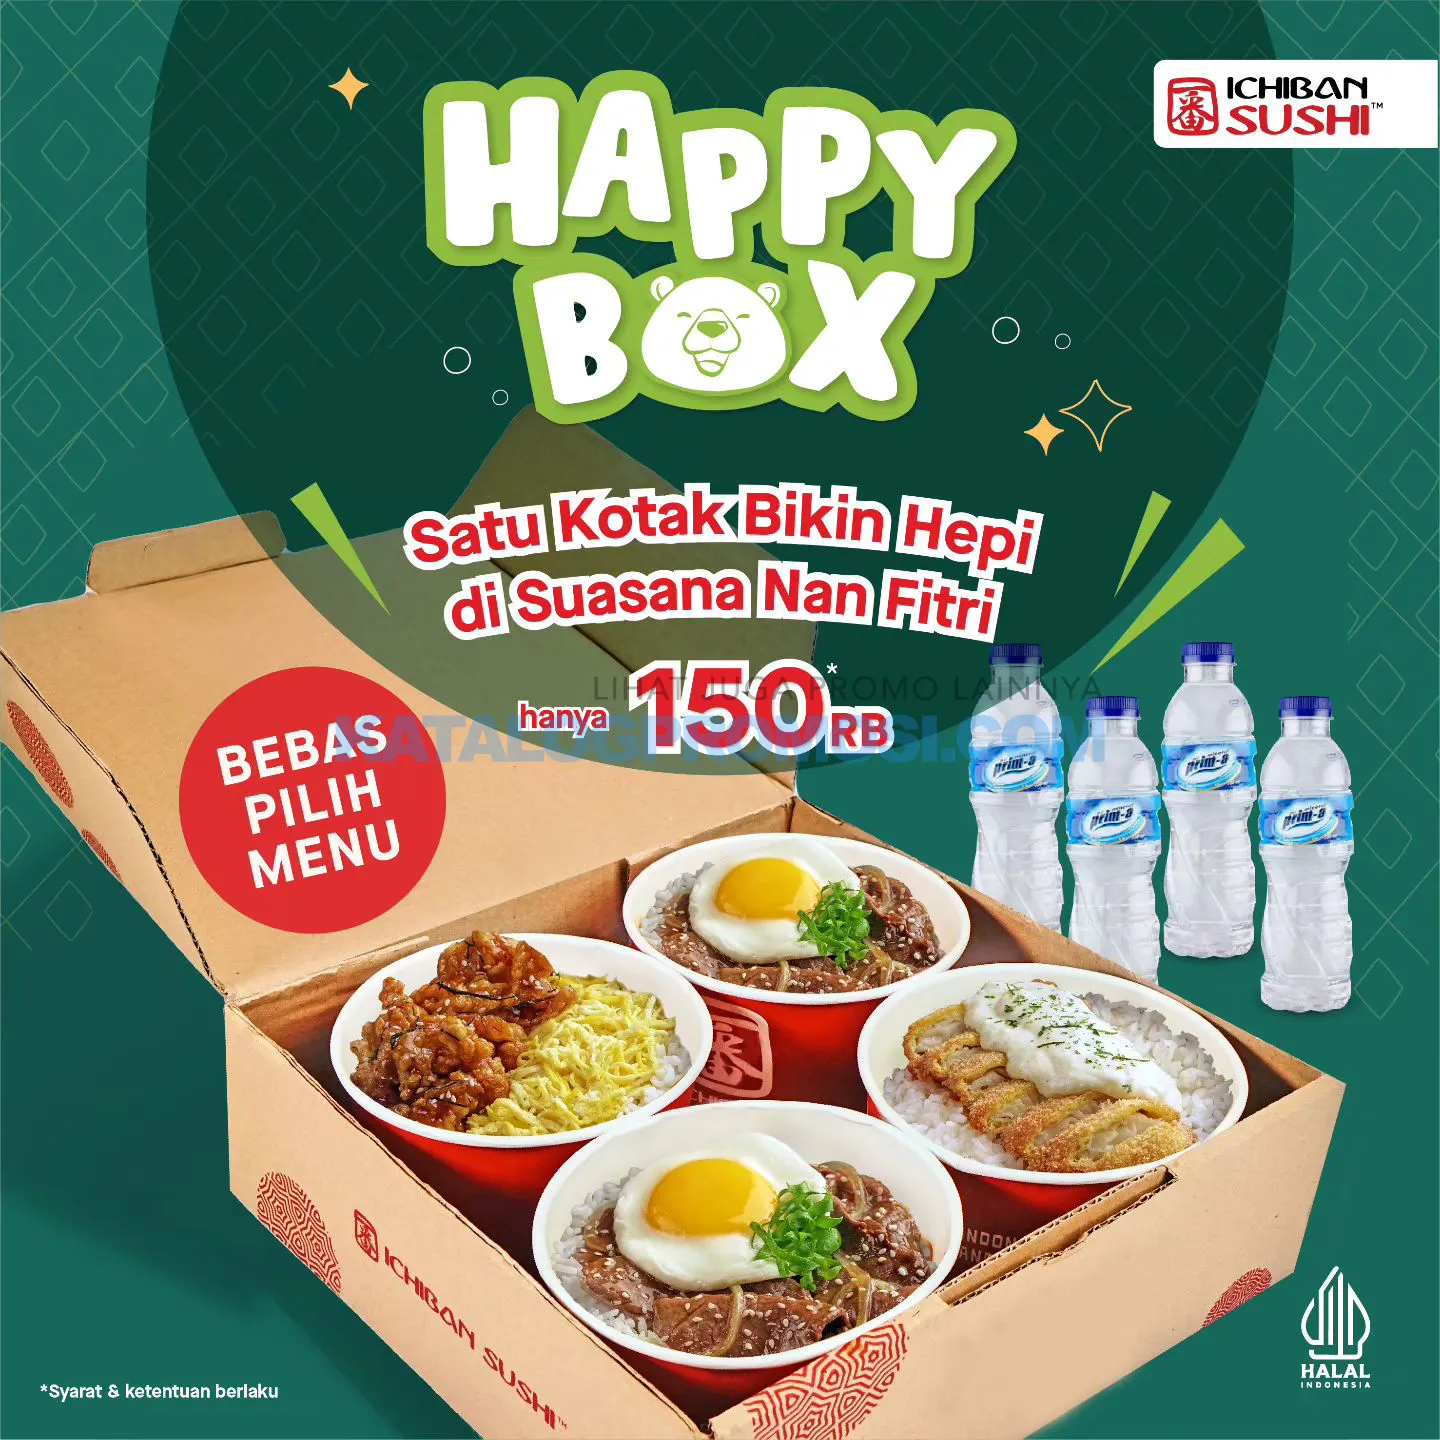 Promo ICHIBAN SUSHI PAKET HAPPY BOX